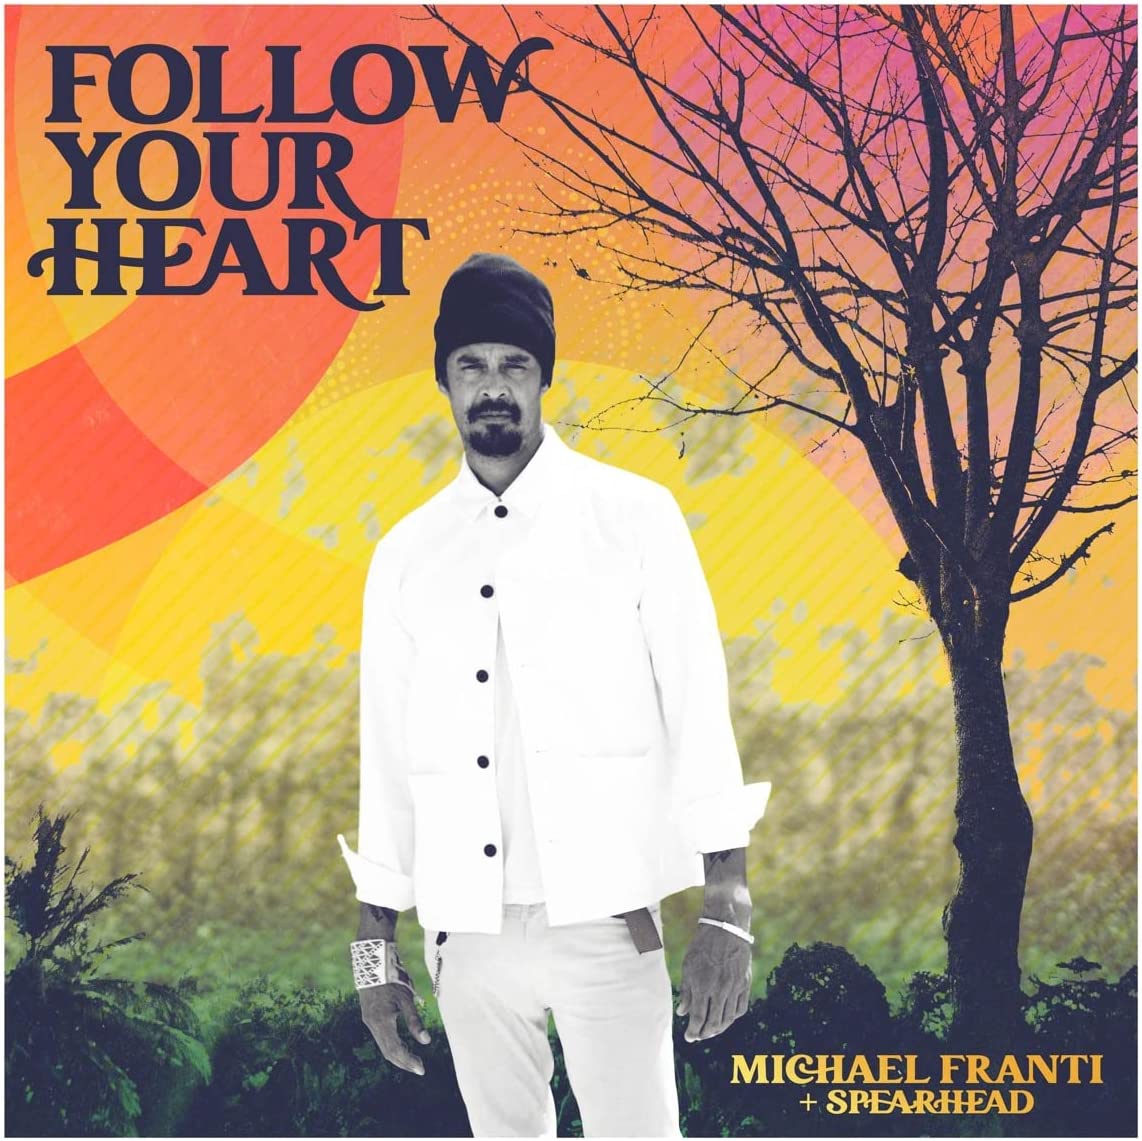 MIchael Franti + Spearhead - Follow Your Heart